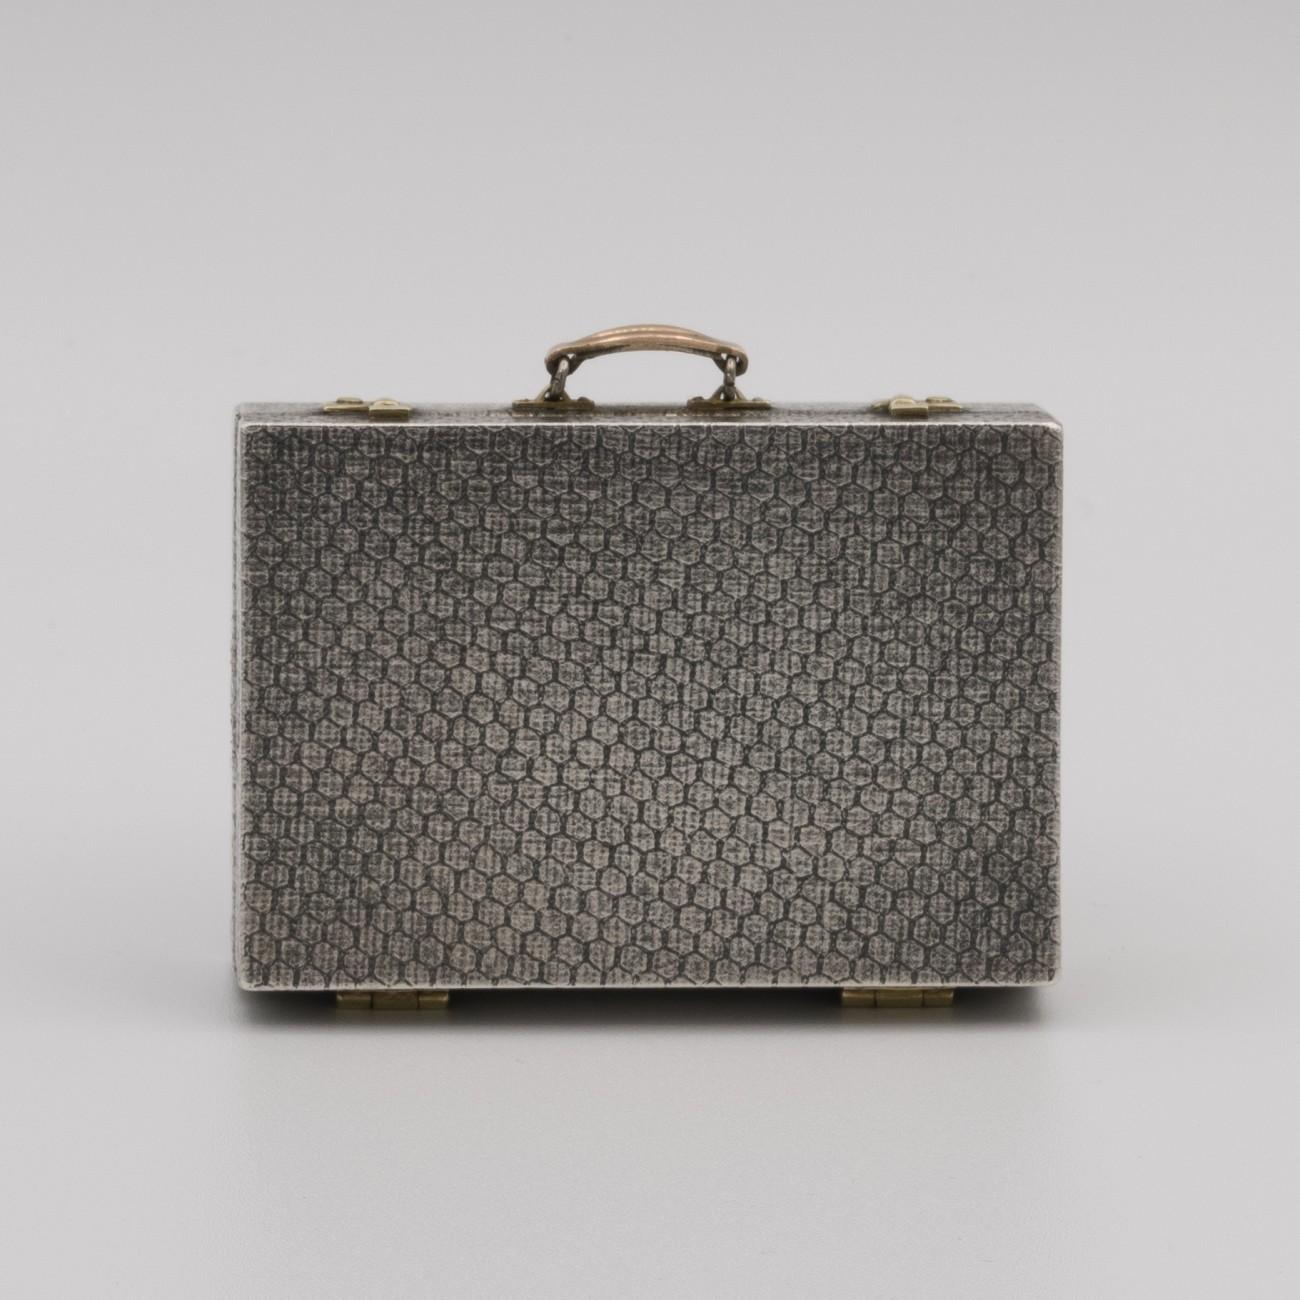 British Miniature Sterling Silver Suitcase Box by Karel Bartosik, Hallmarked London 1983